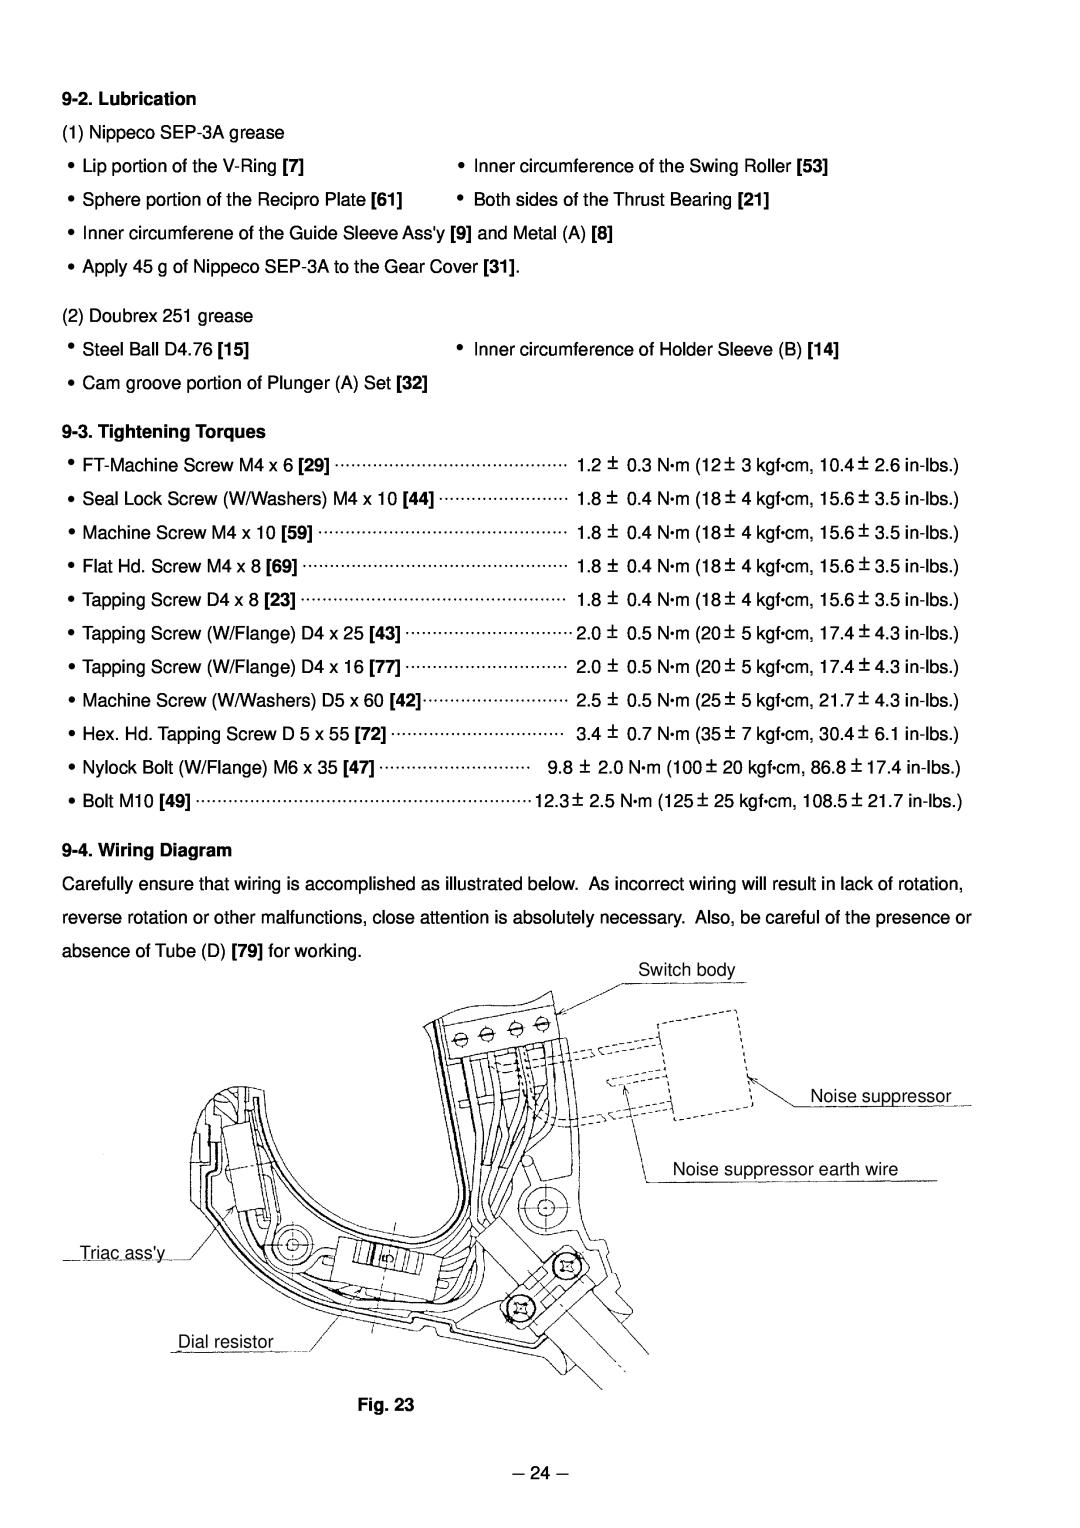 Hitachi CR 13VA service manual Lubrication, Tightening Torques, Wiring Diagram 